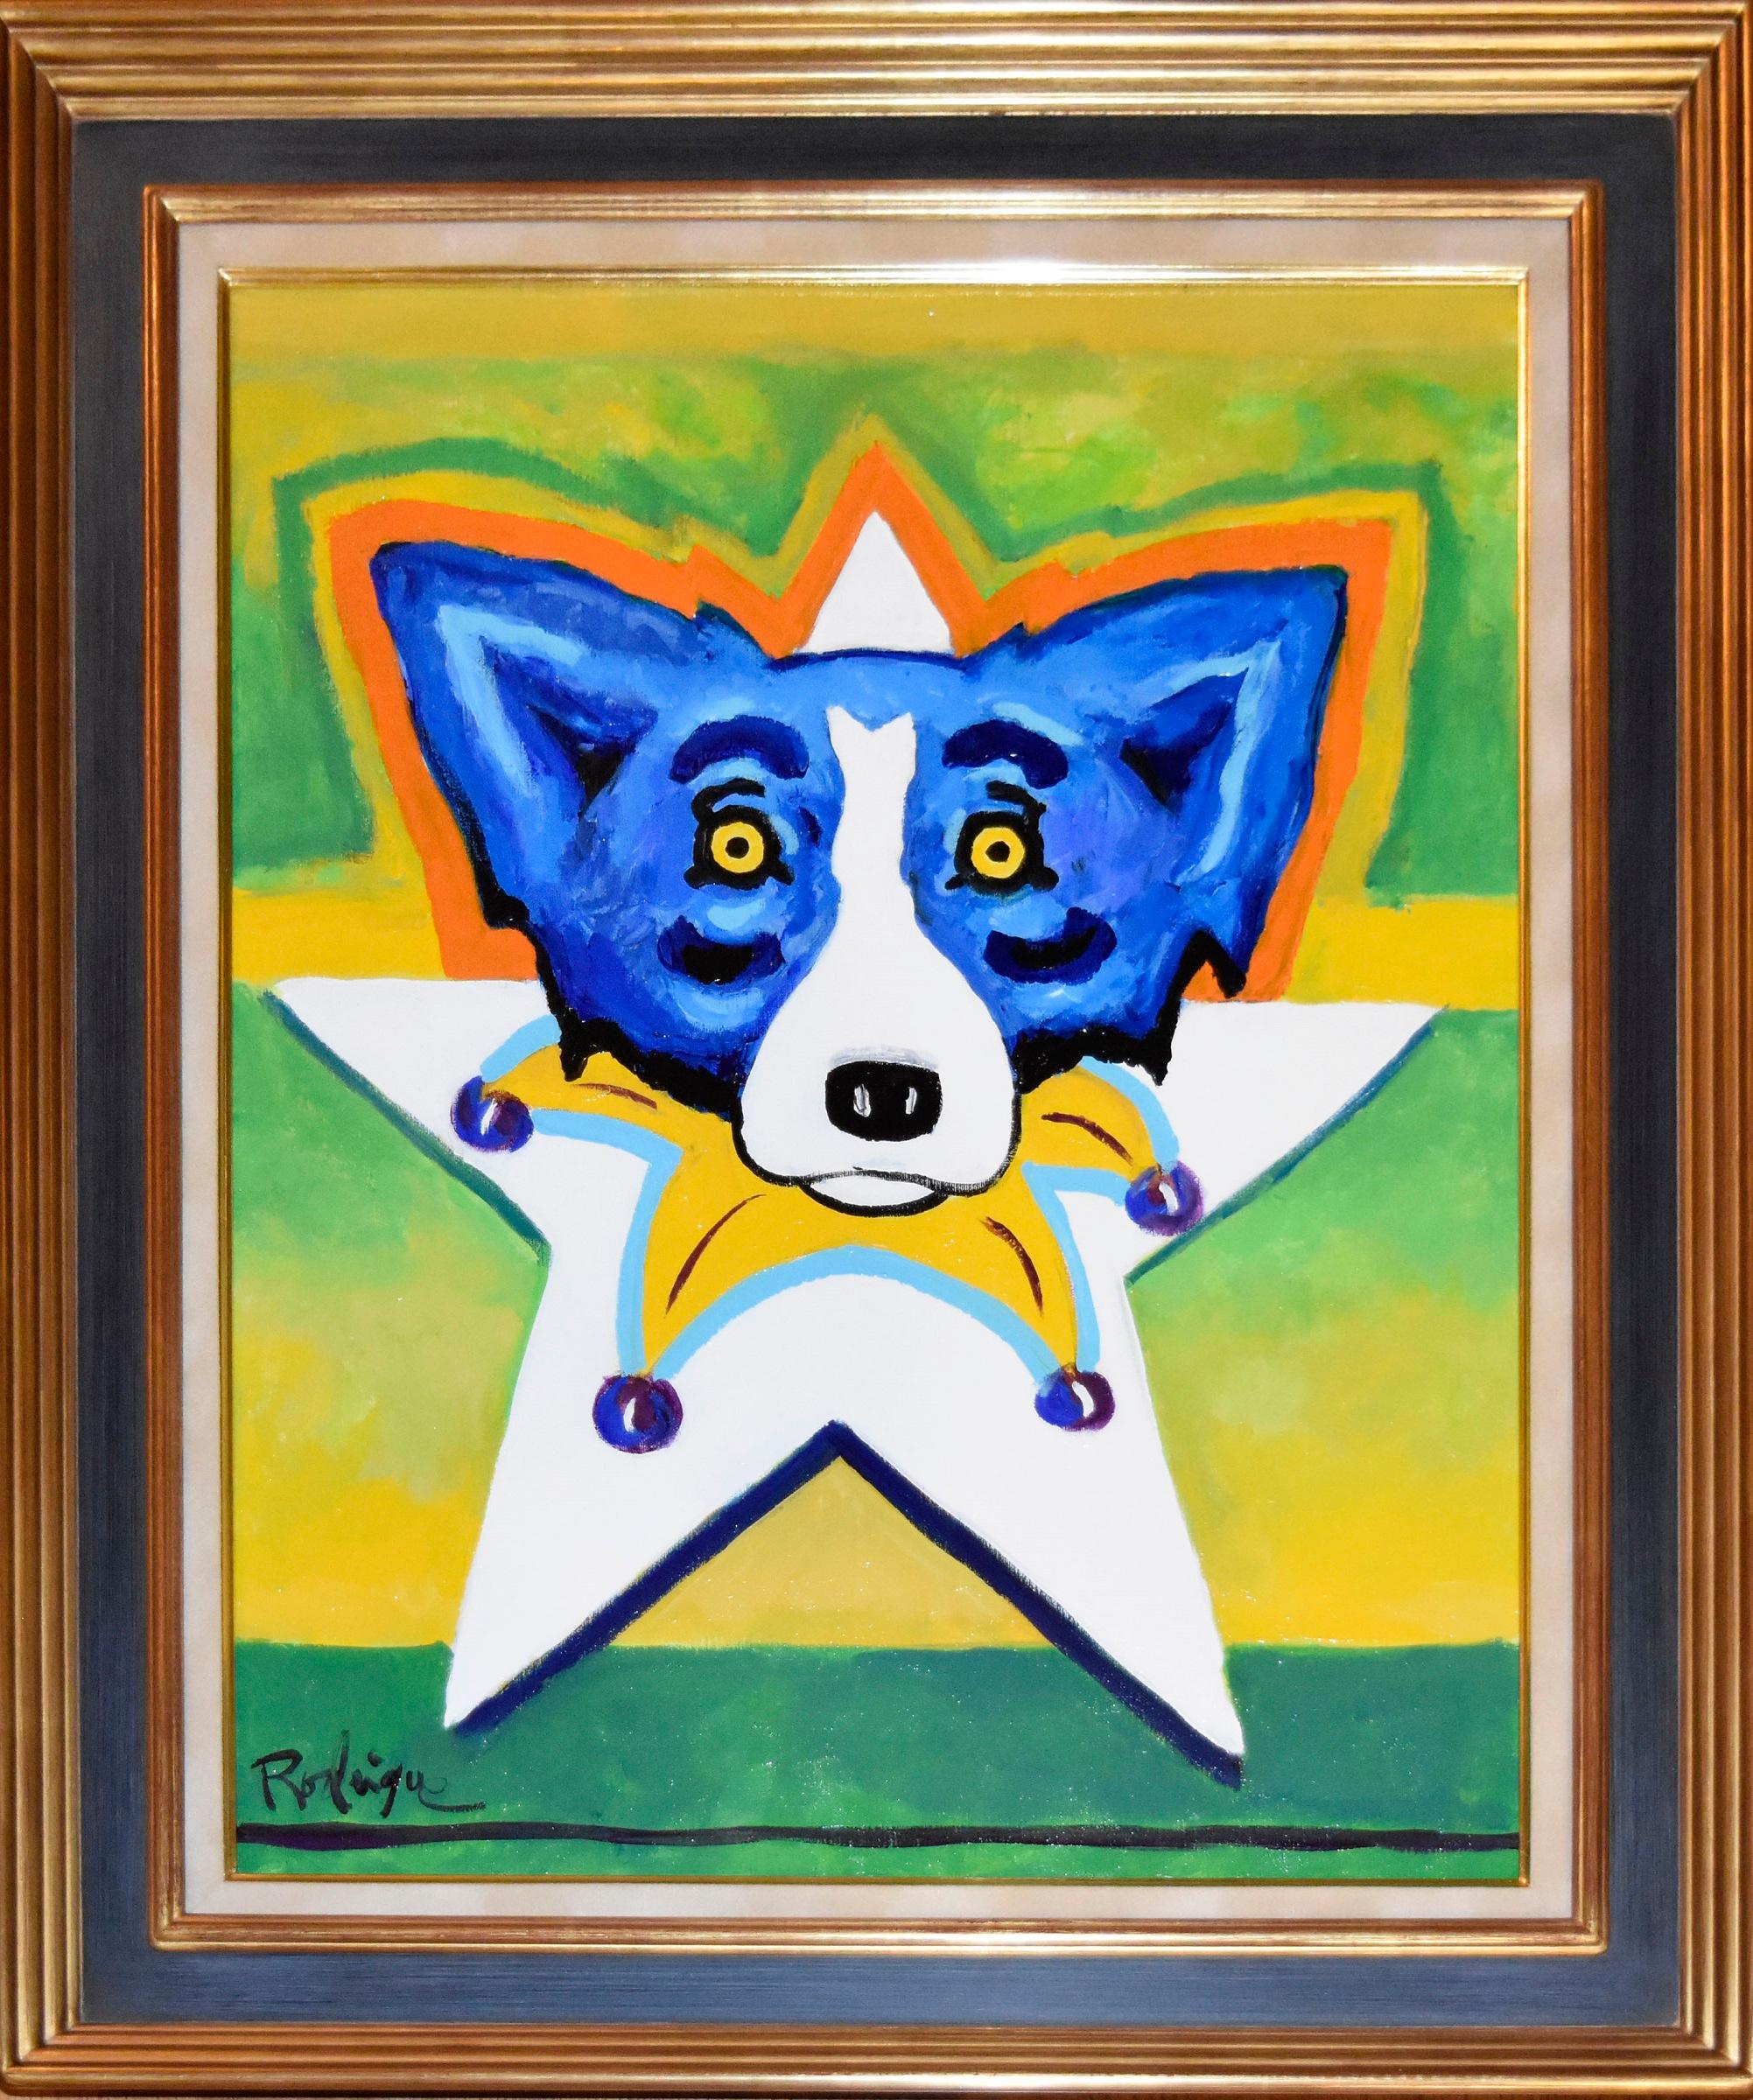 George Rodrigue Animal Painting - Original - Star of Mardi Gras - Signed Acrylic on Canvas - Blue Dog